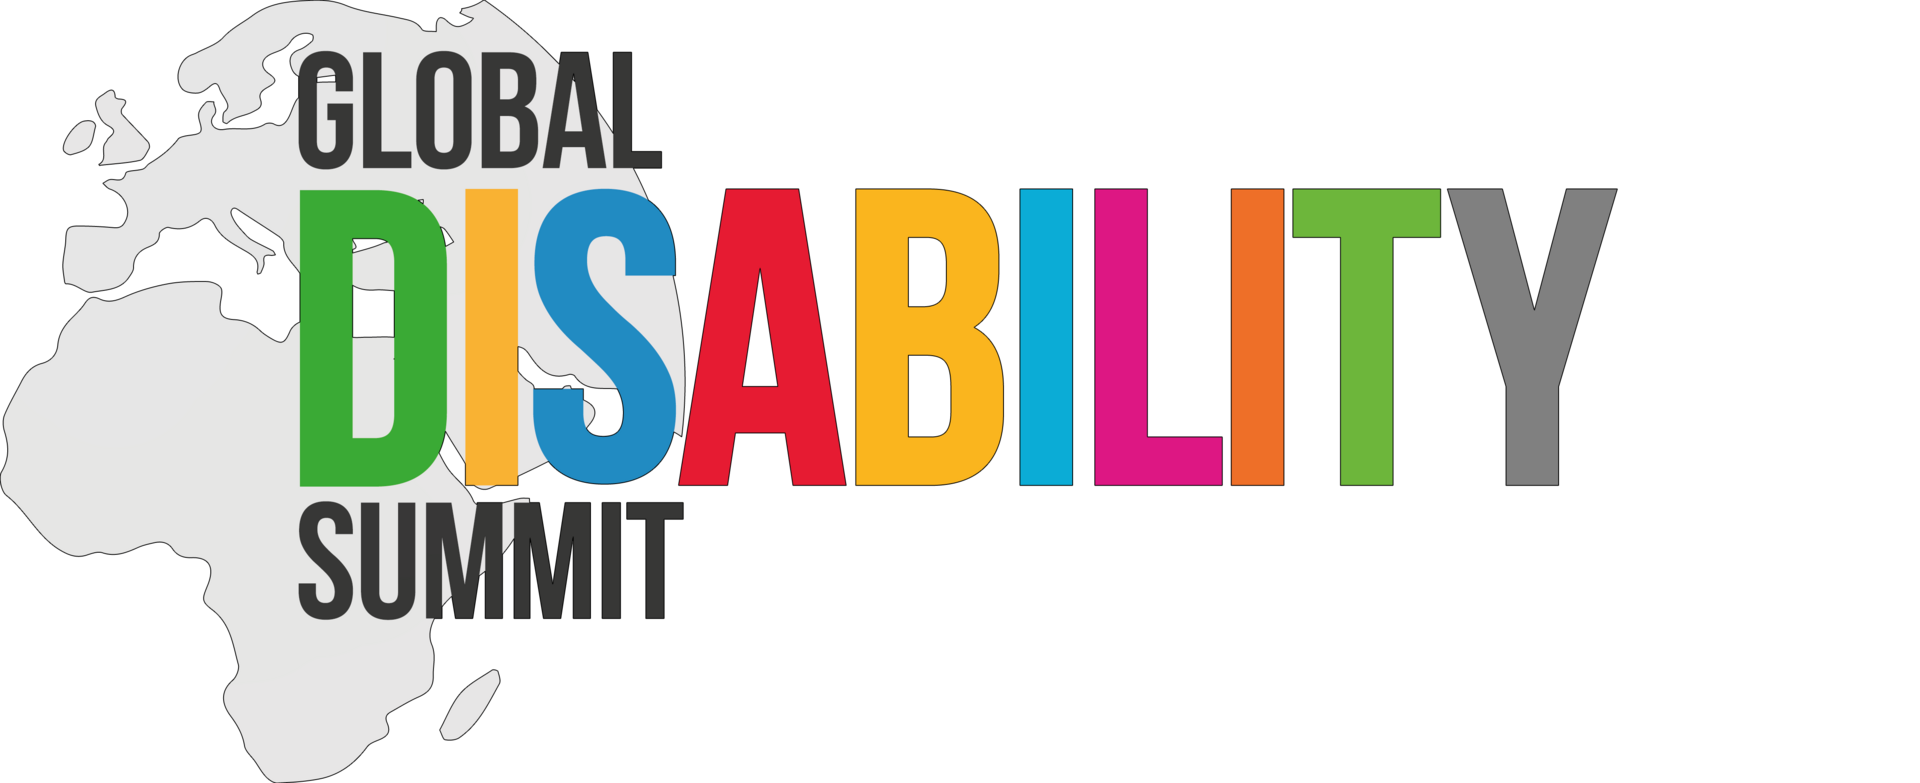 Logo Global Disability Summit